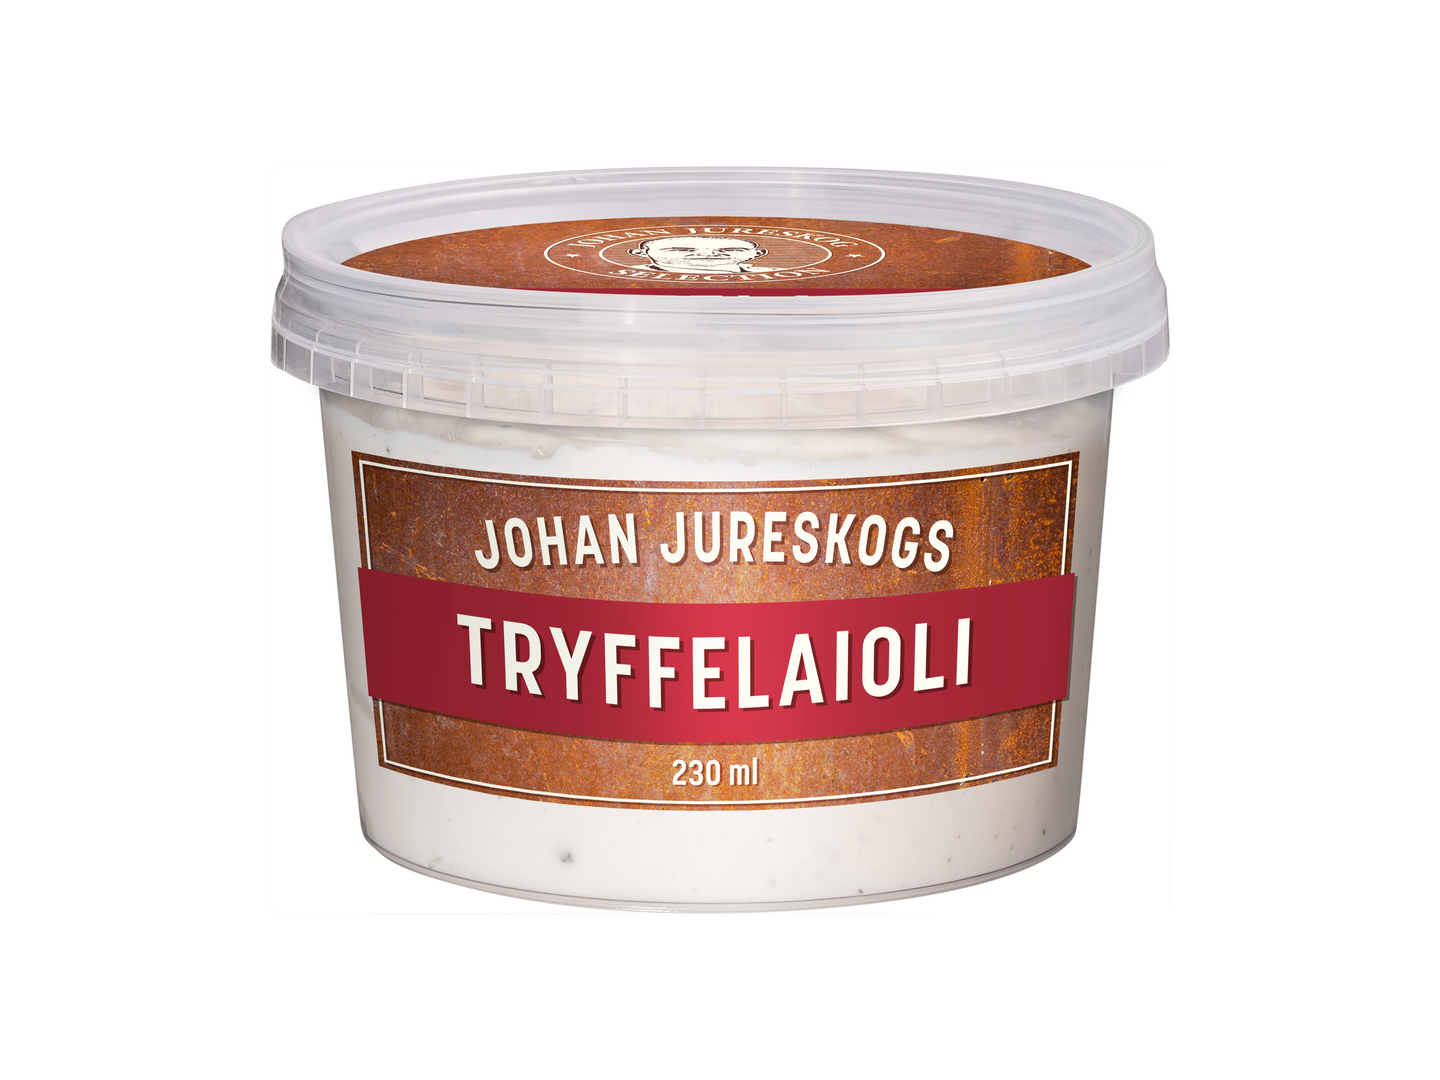 Johan Jureskog tryffeliaioli 230ml